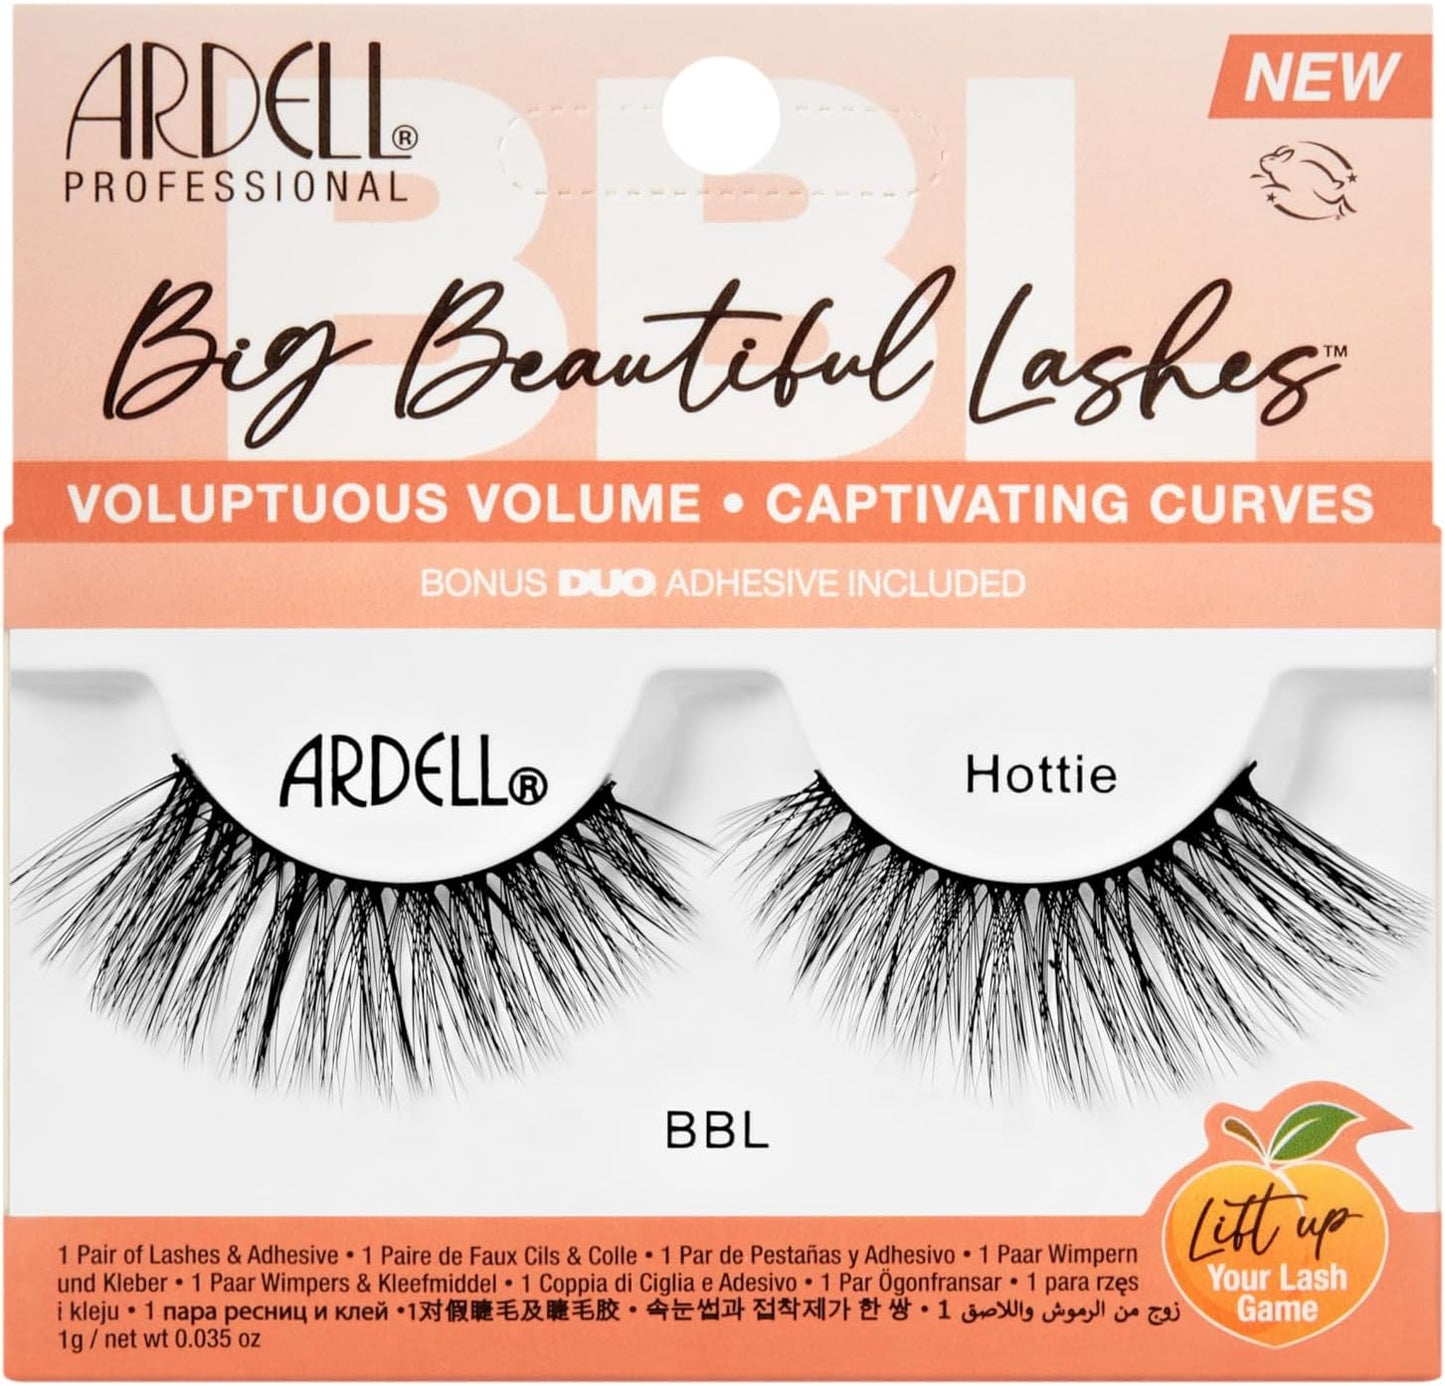 Ardell Big Beautiful Lashes Hottie False Eyelashes, Duo Adhesive Included, Medium Volume, 20 mm Length, Vegan Friendly, 1 Pair (Pack of 1)